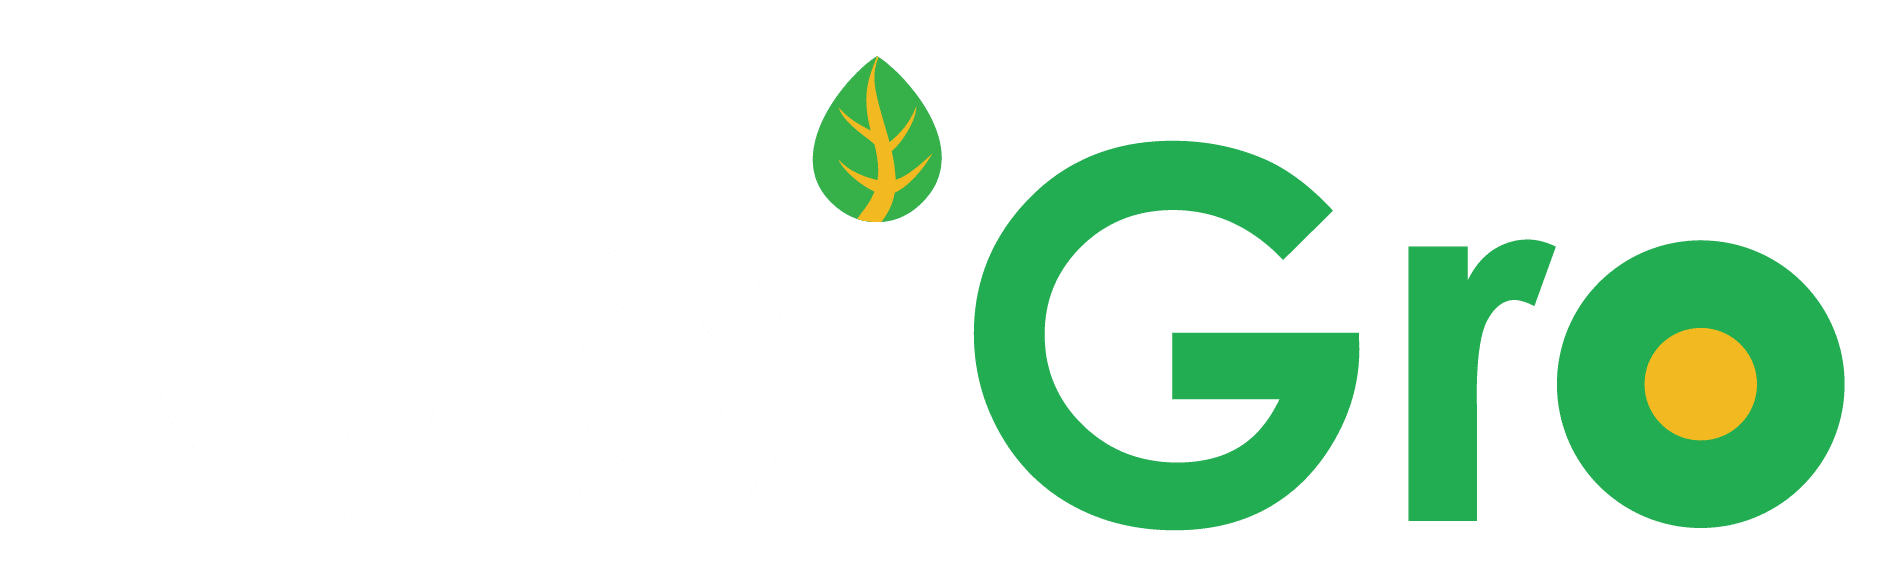 UbiGro Greenhouse Film Logo